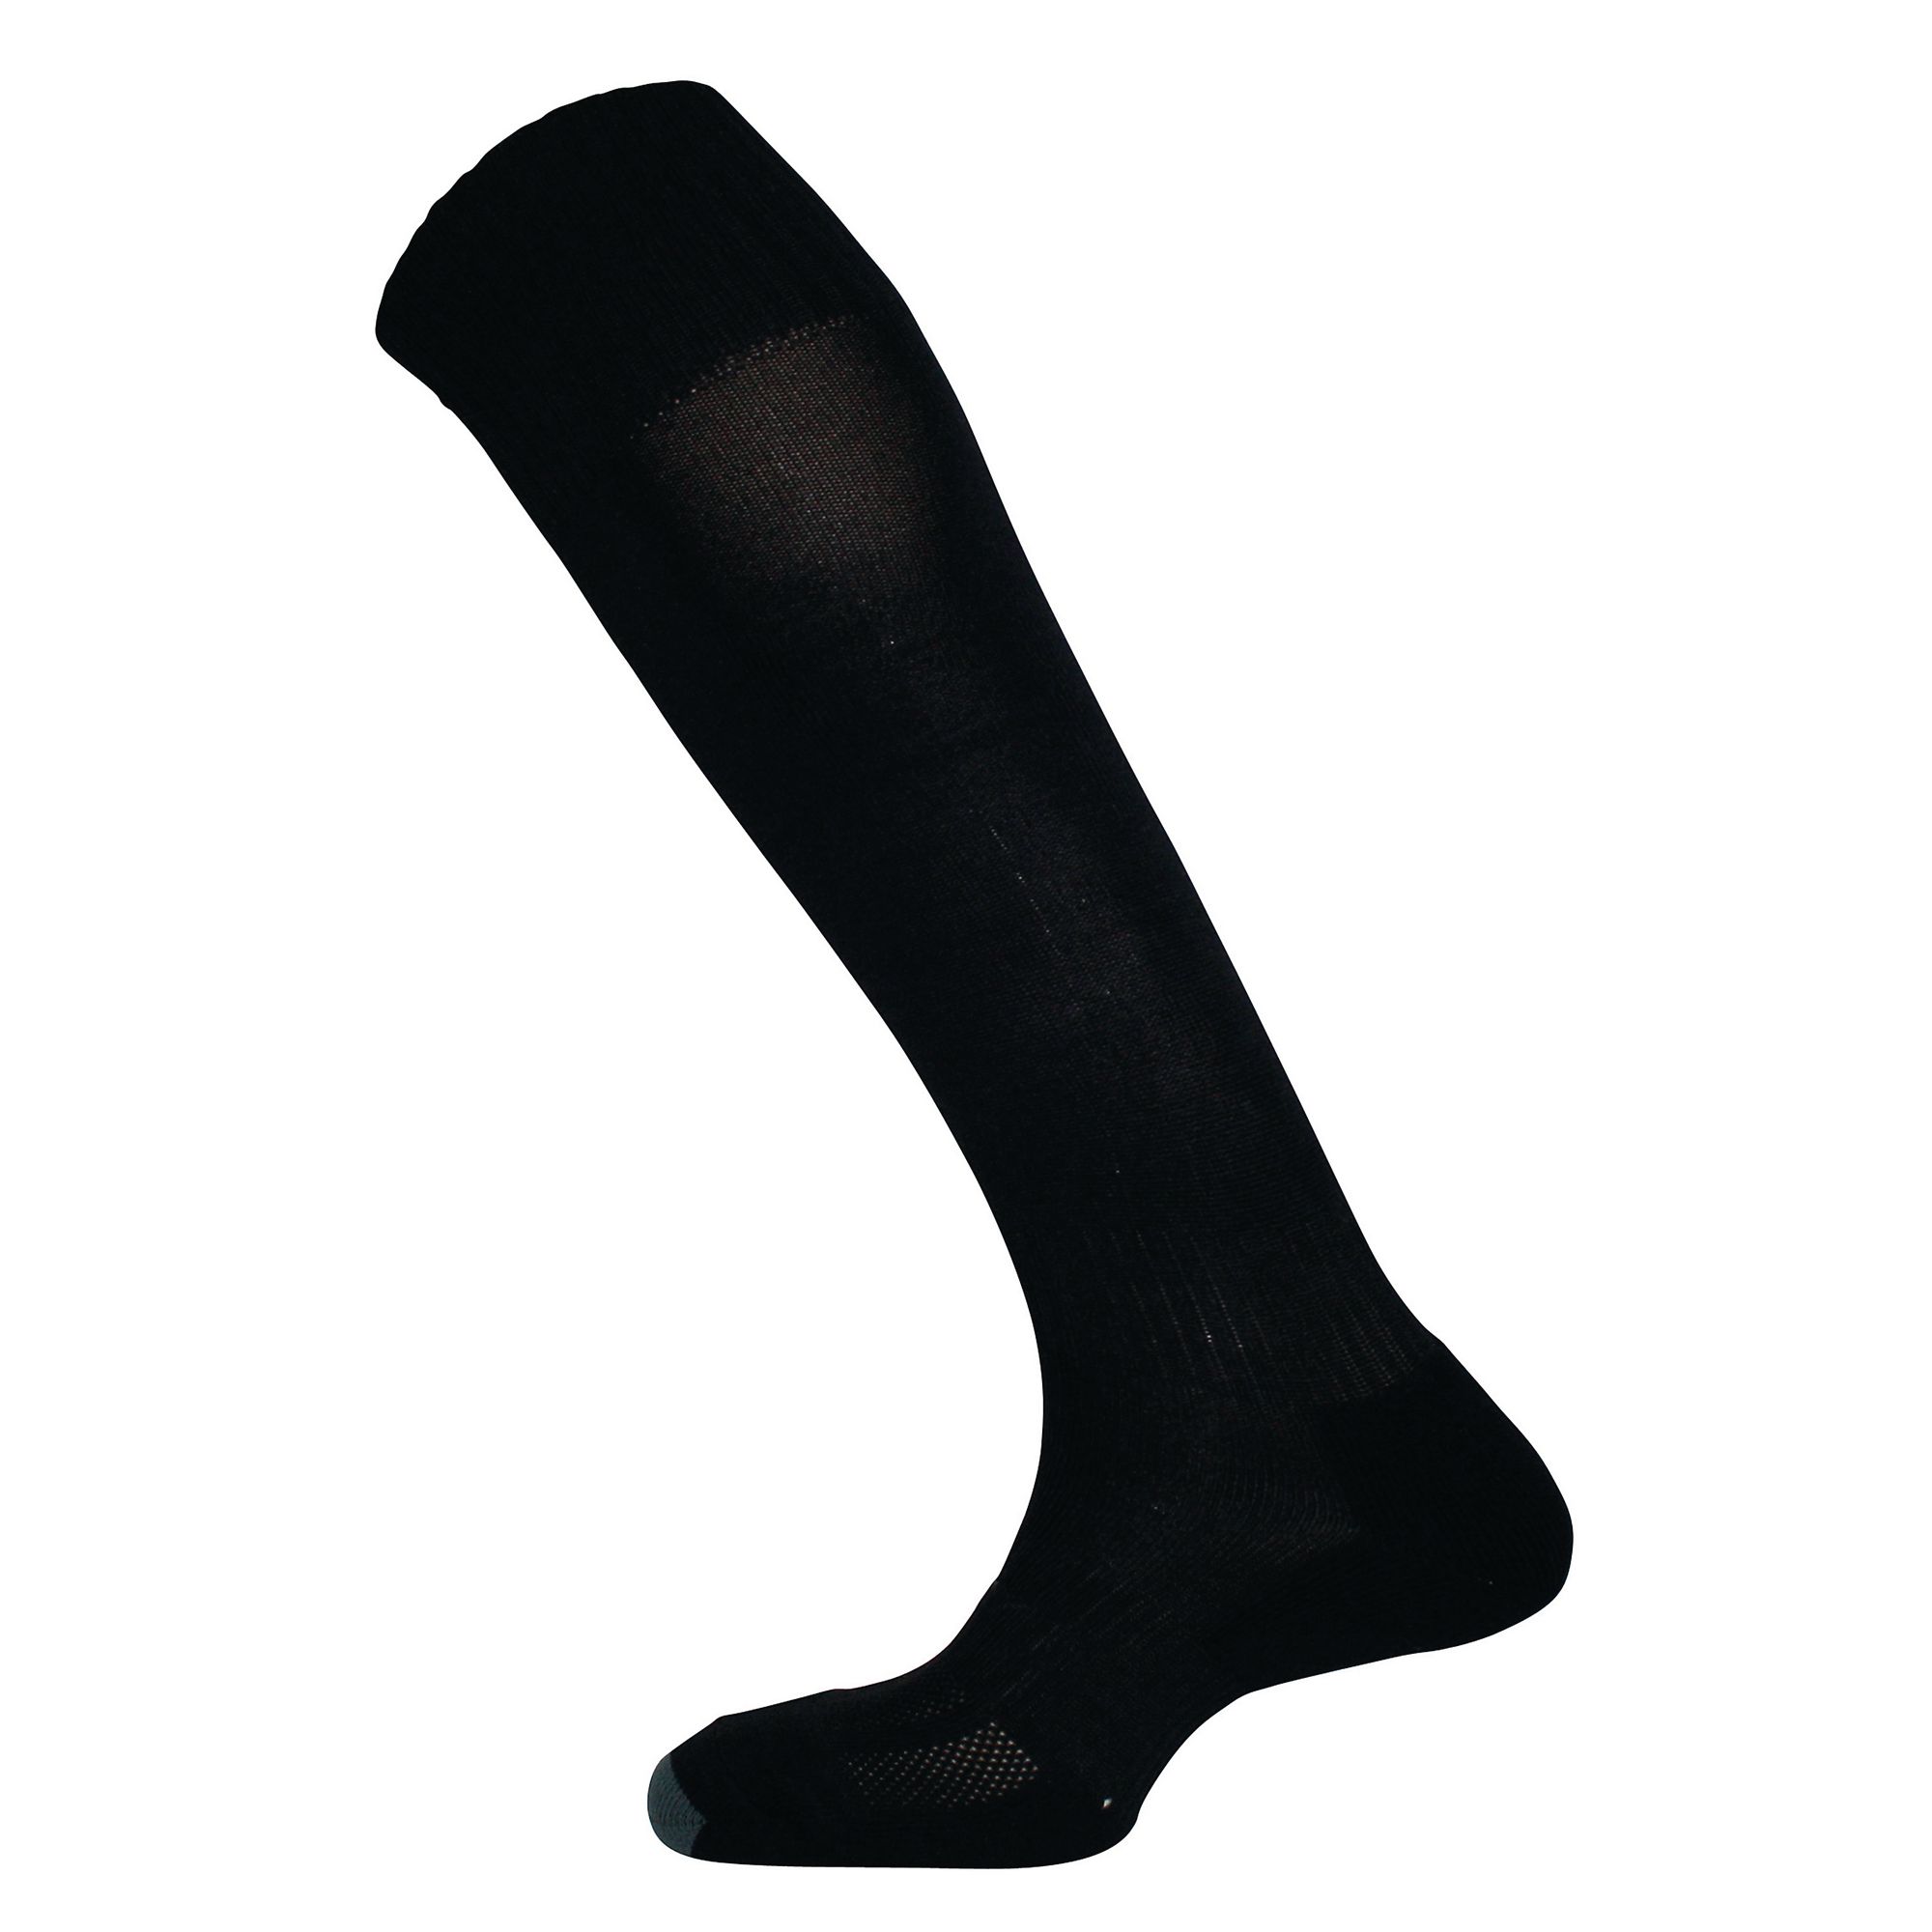 Mitre Mercury Socks Uk 7-12 Black